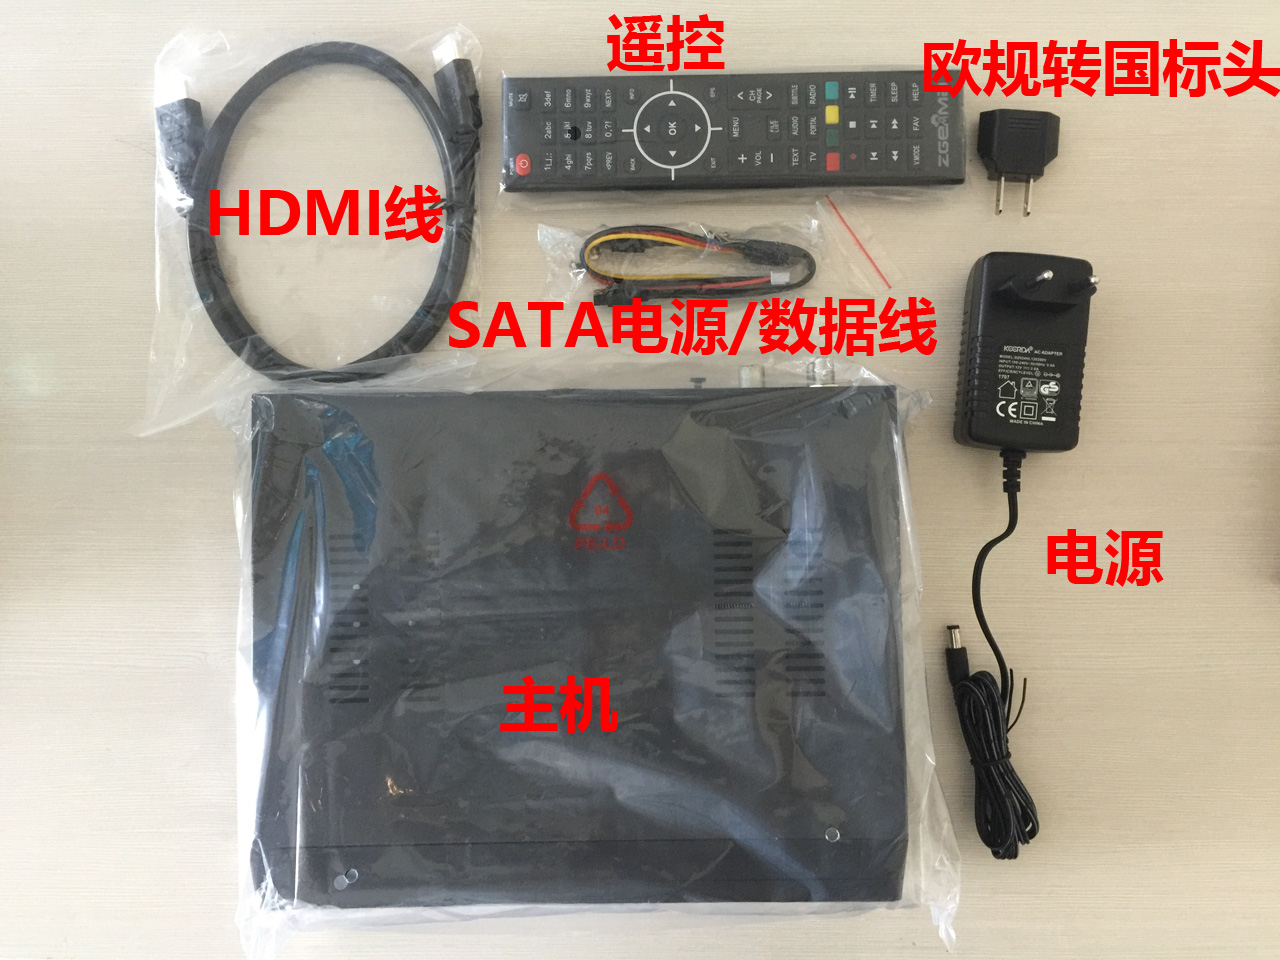 H7S硬件评测-4K高清收视[湖北武汉](图文)